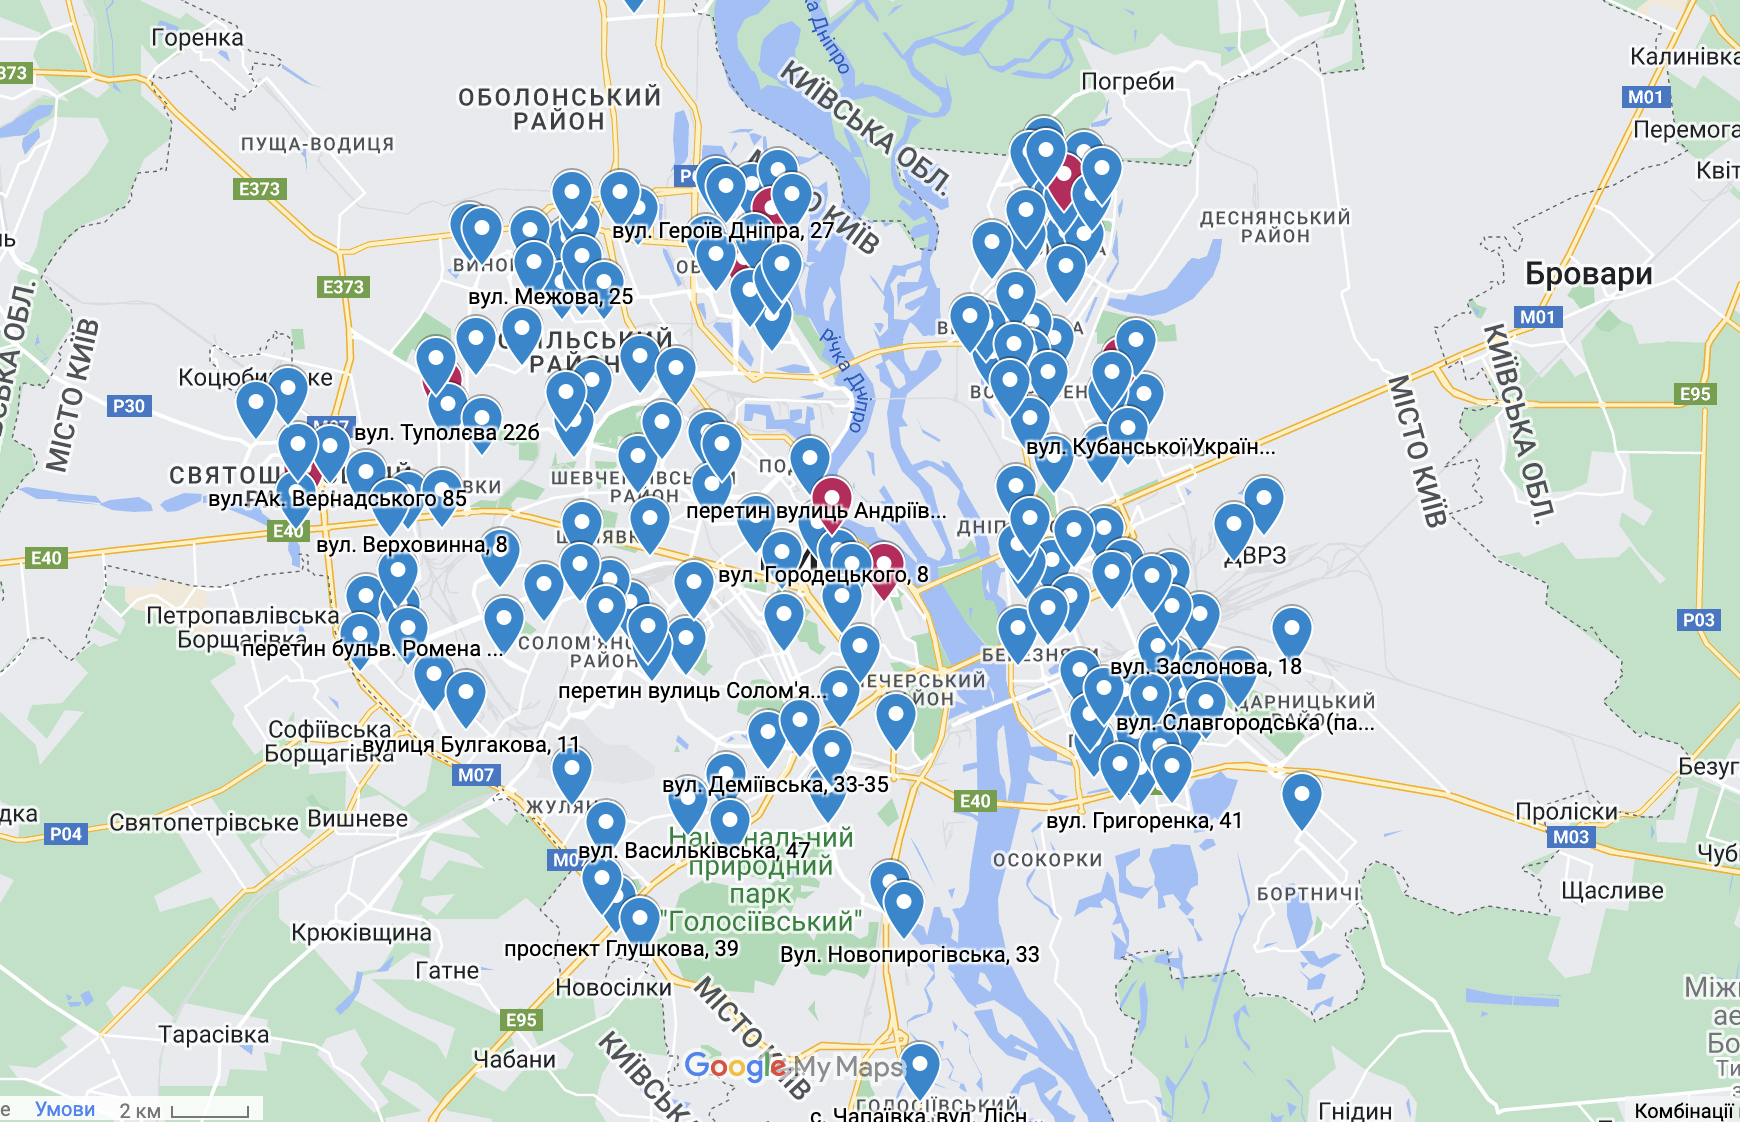 Карта бюветов. Карта затопления Киева. Киев на карте. Районы затопления Киева на карте. Карта подтопления.